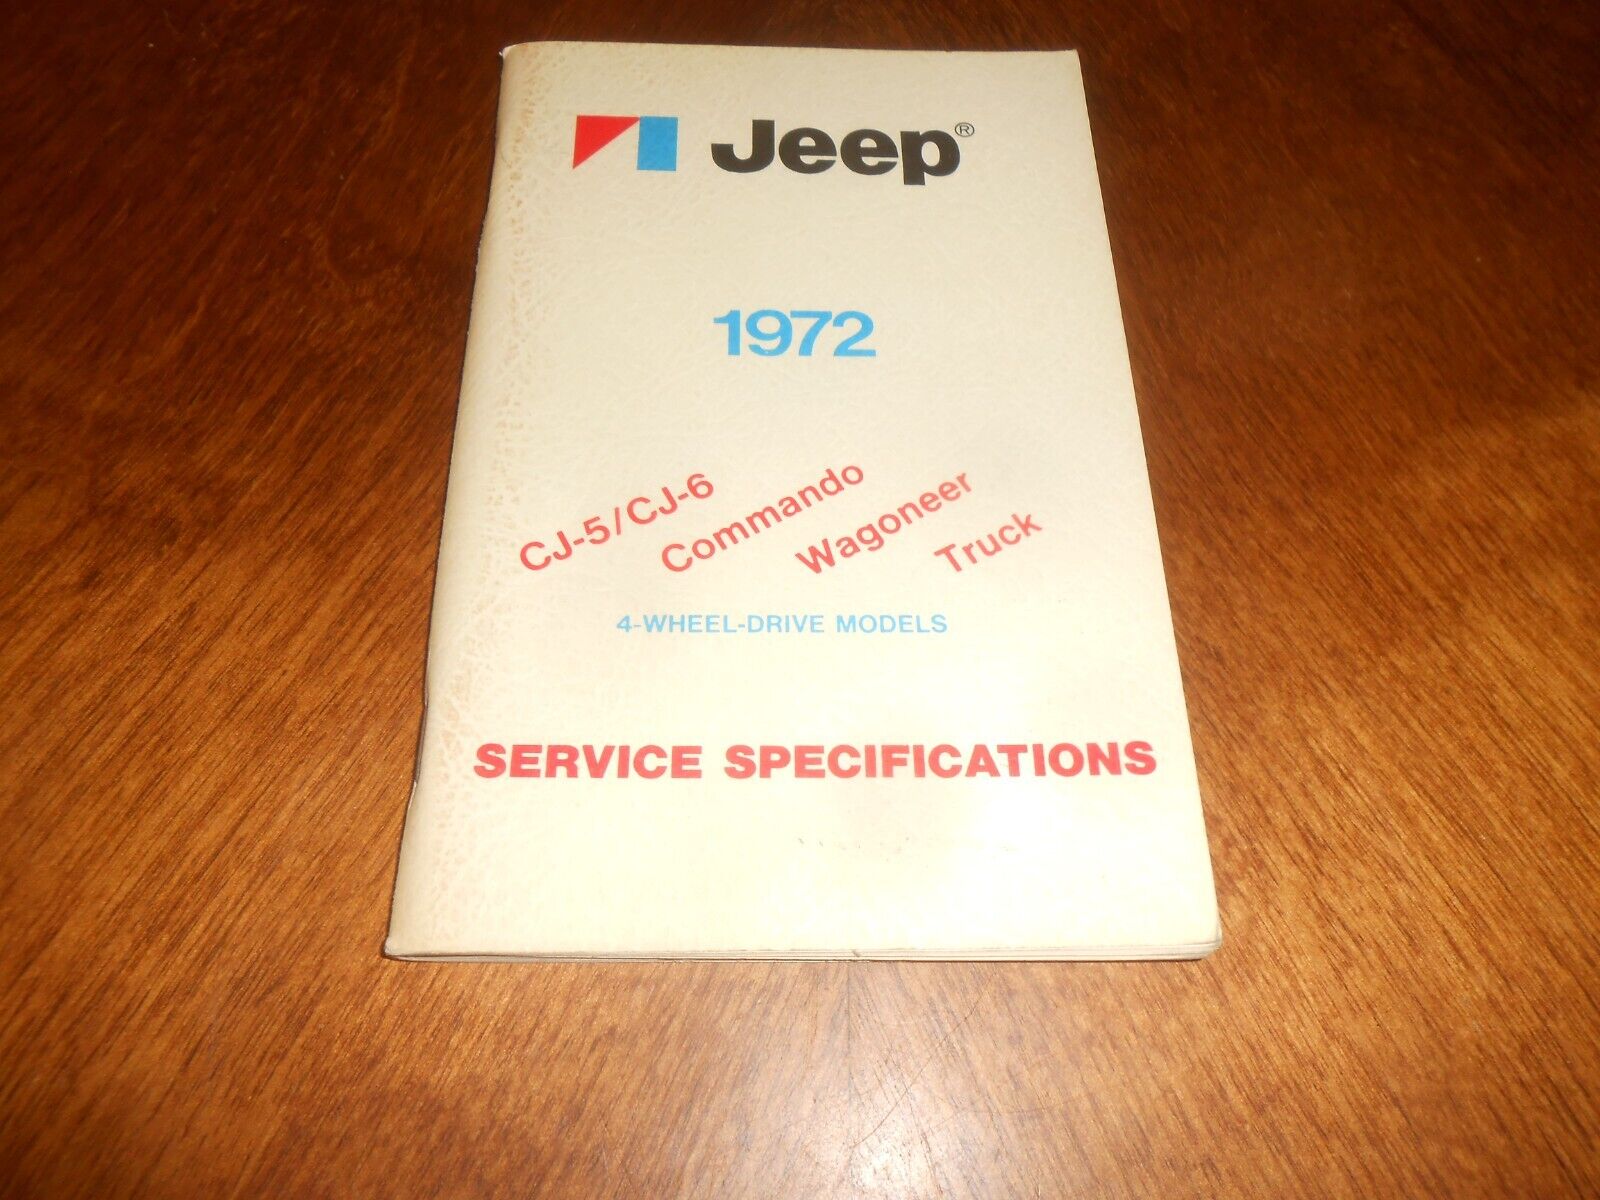 1972 JEEP SERVICE MANUAL SPECS BOOK CJ-5 CJ-6 COMMANDO WAGONEER TRUCK / 68 Pages